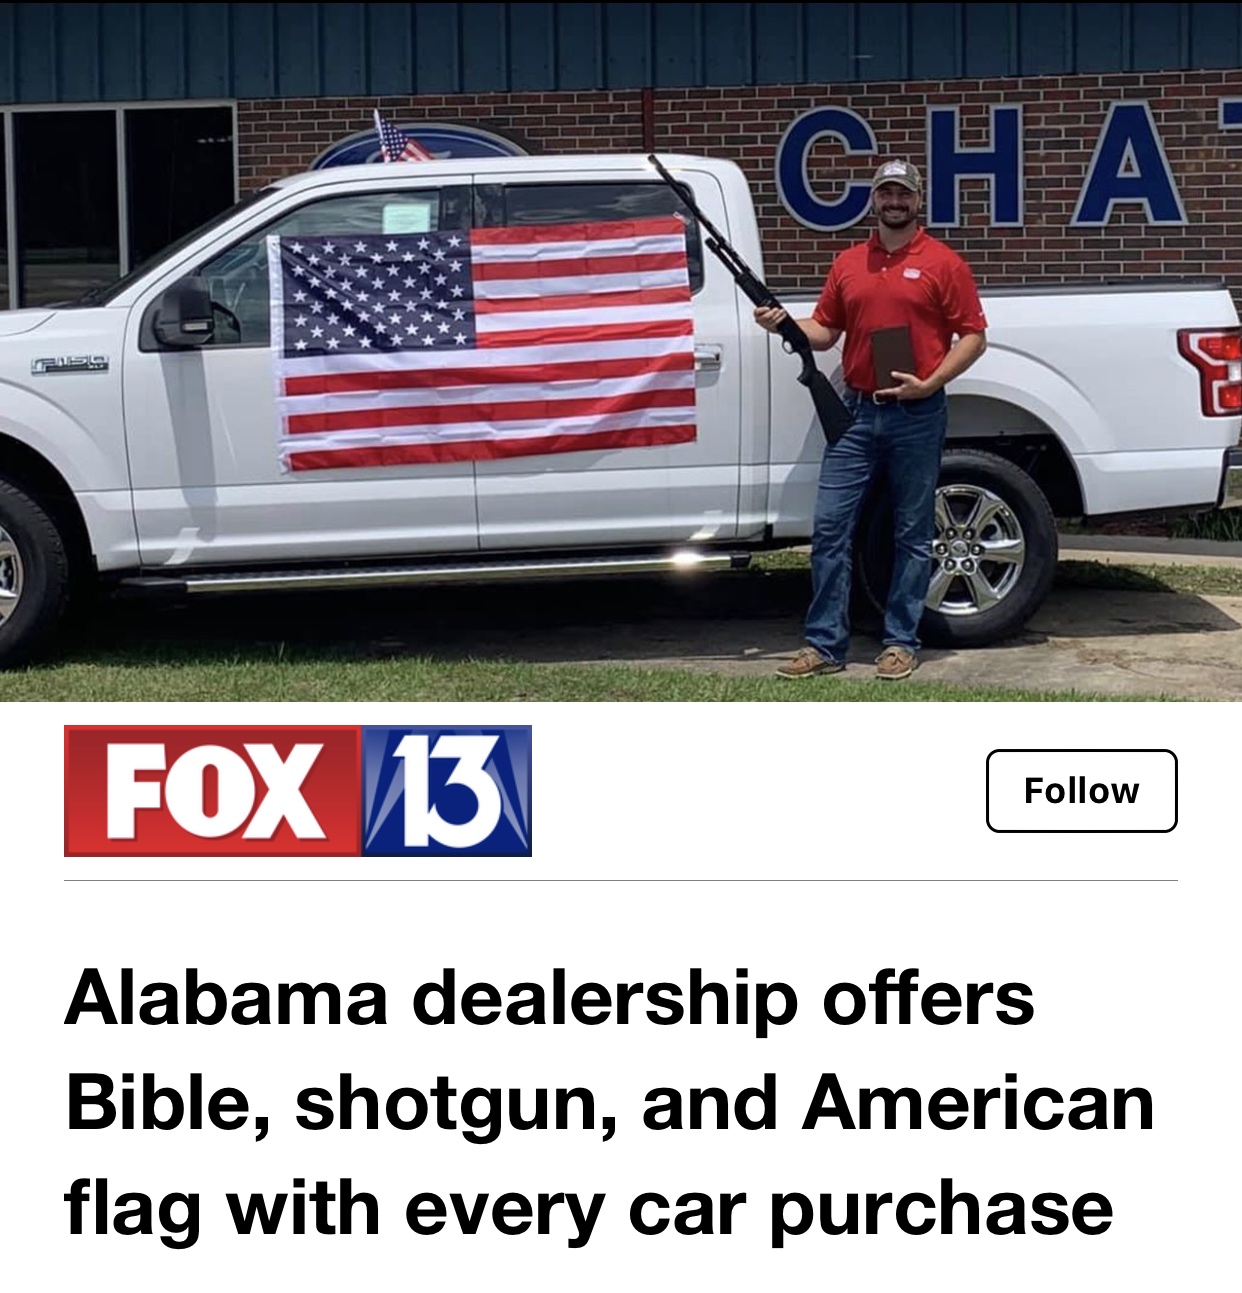 fox 11 - Cha Luu Fox 13 Alabama dealership offers Bible, shotgun, and American flag with every car purchase